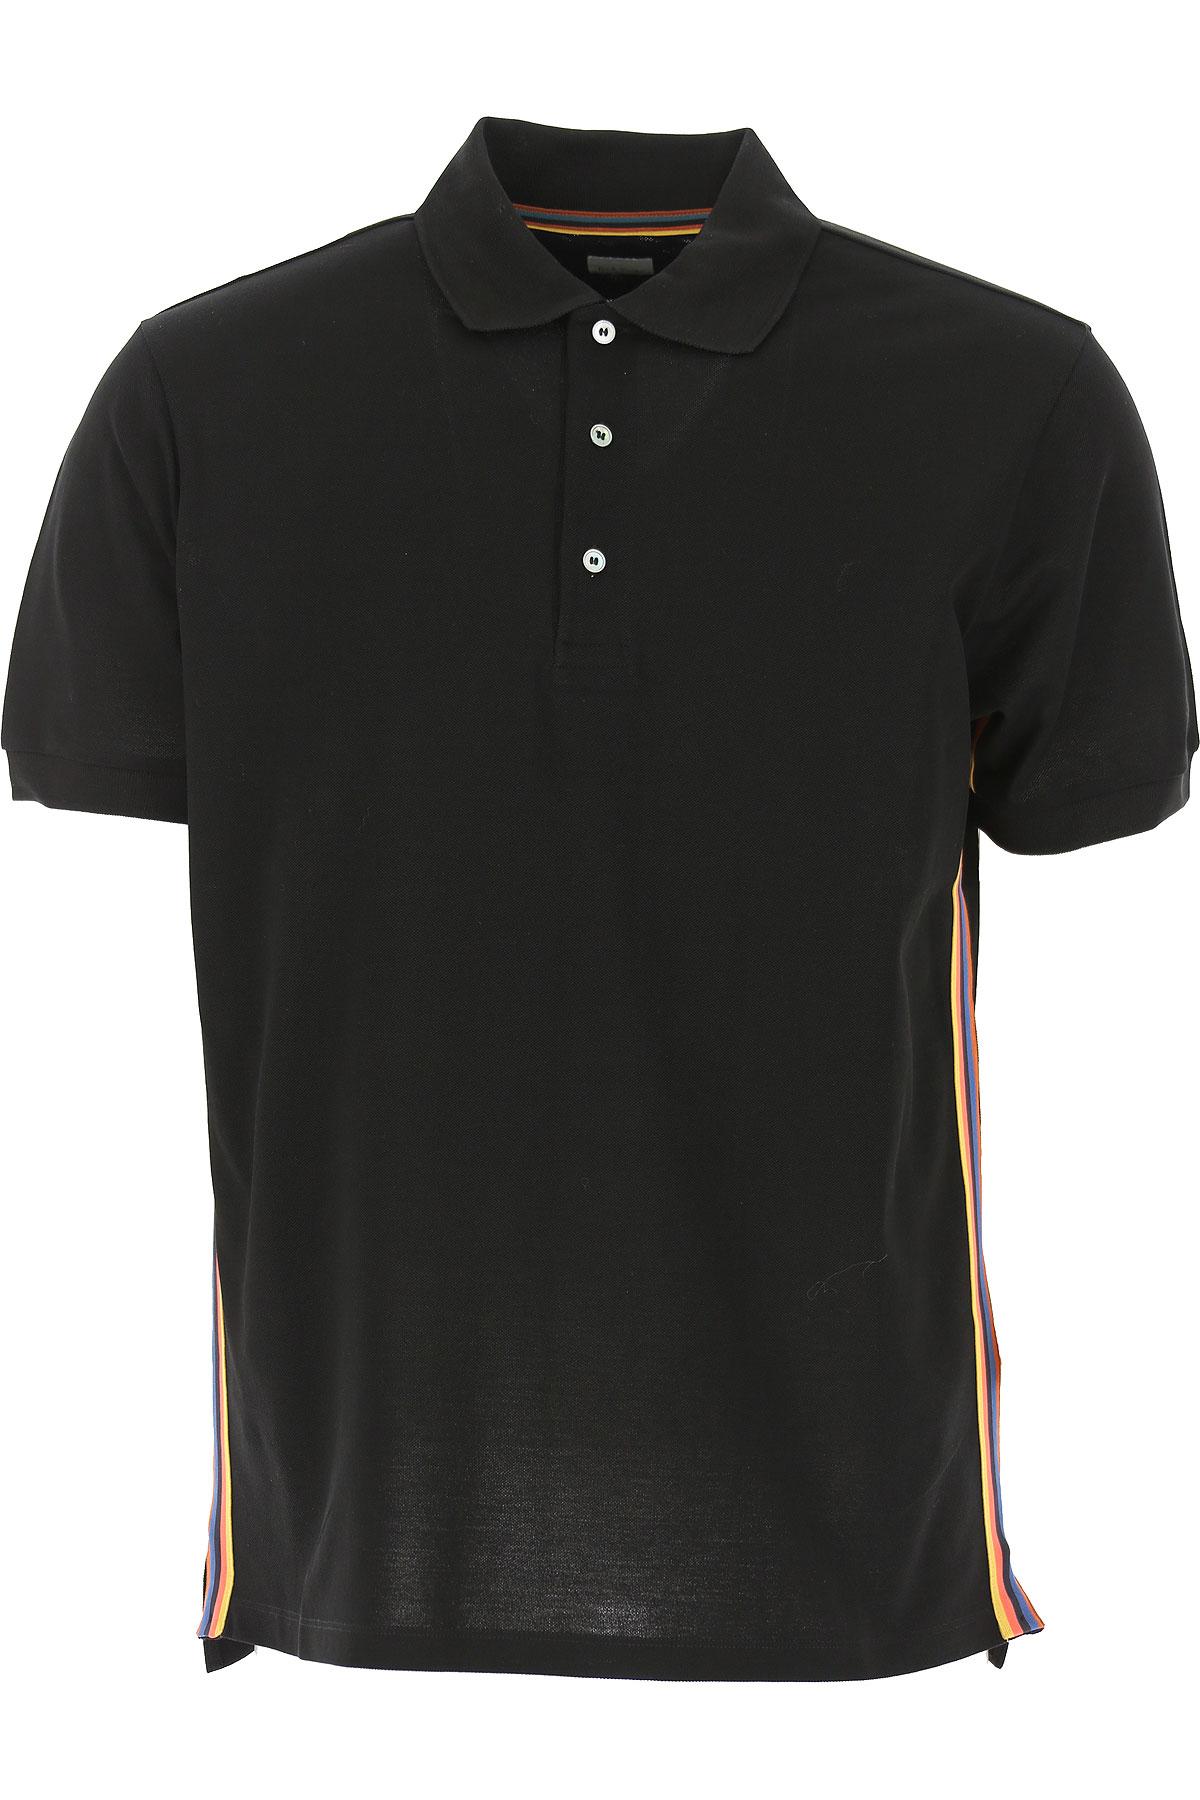 Paul Smith Polo Shirt For Men On Sale in Black for Men - Lyst